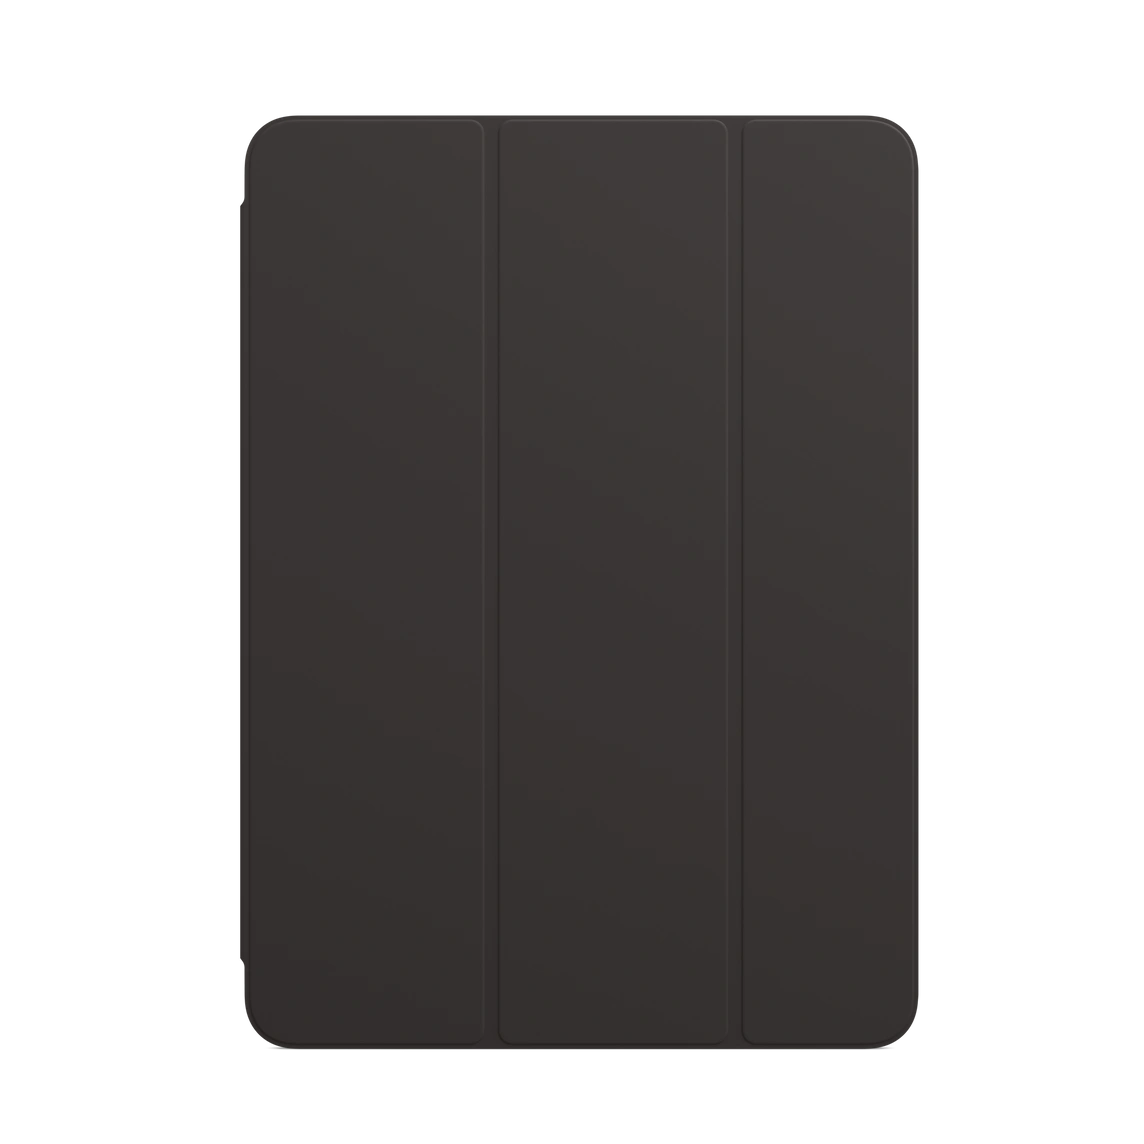 Apple Smart Folio for iPad Air (4th generation)